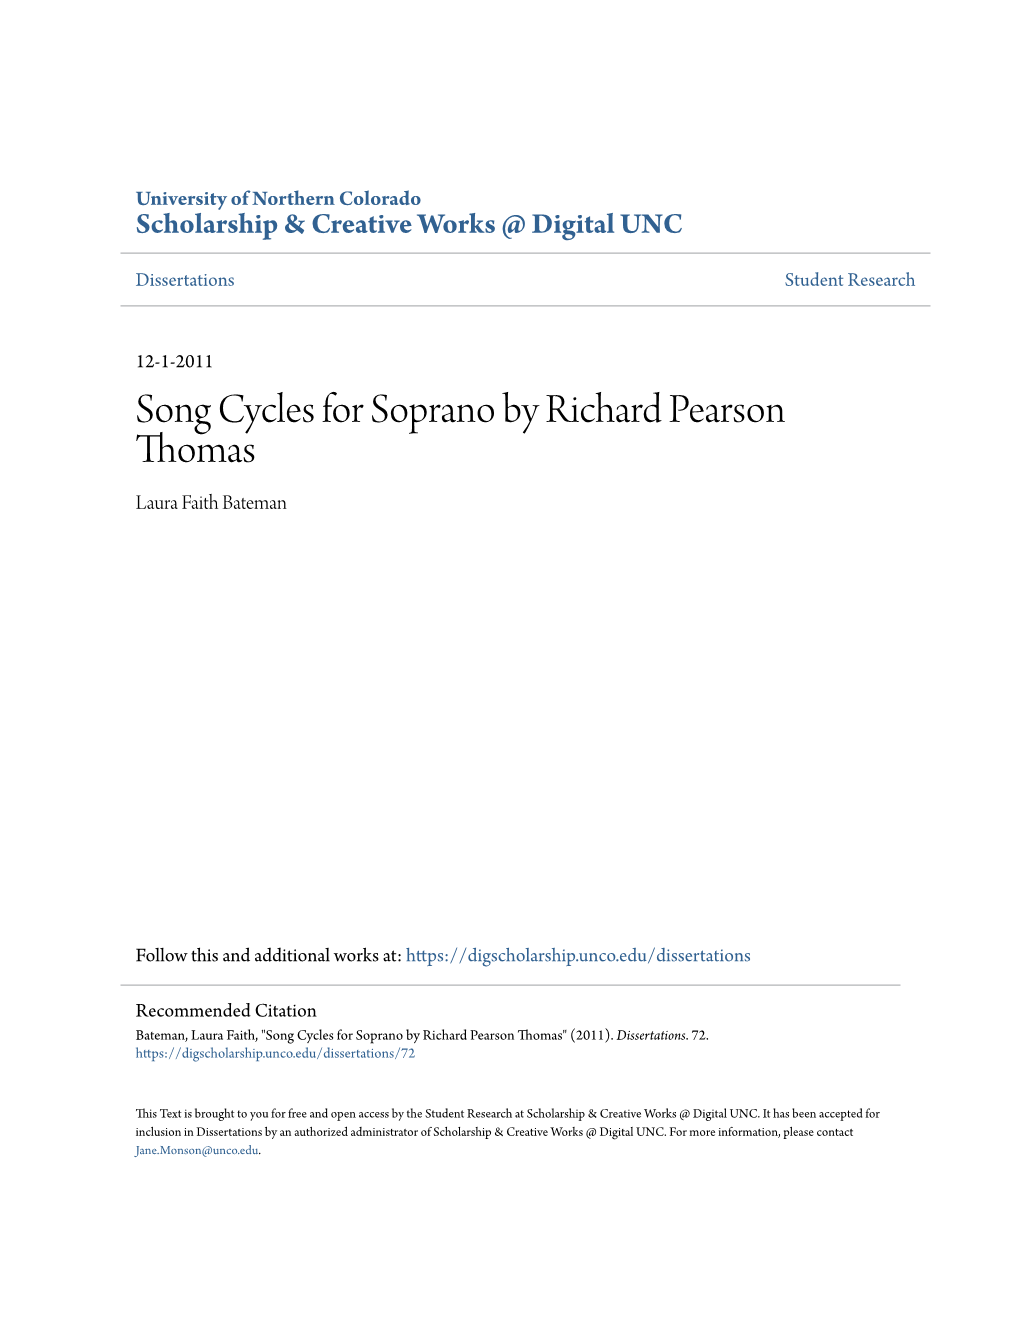 Song Cycles for Soprano by Richard Pearson Thomas Laura Faith Bateman